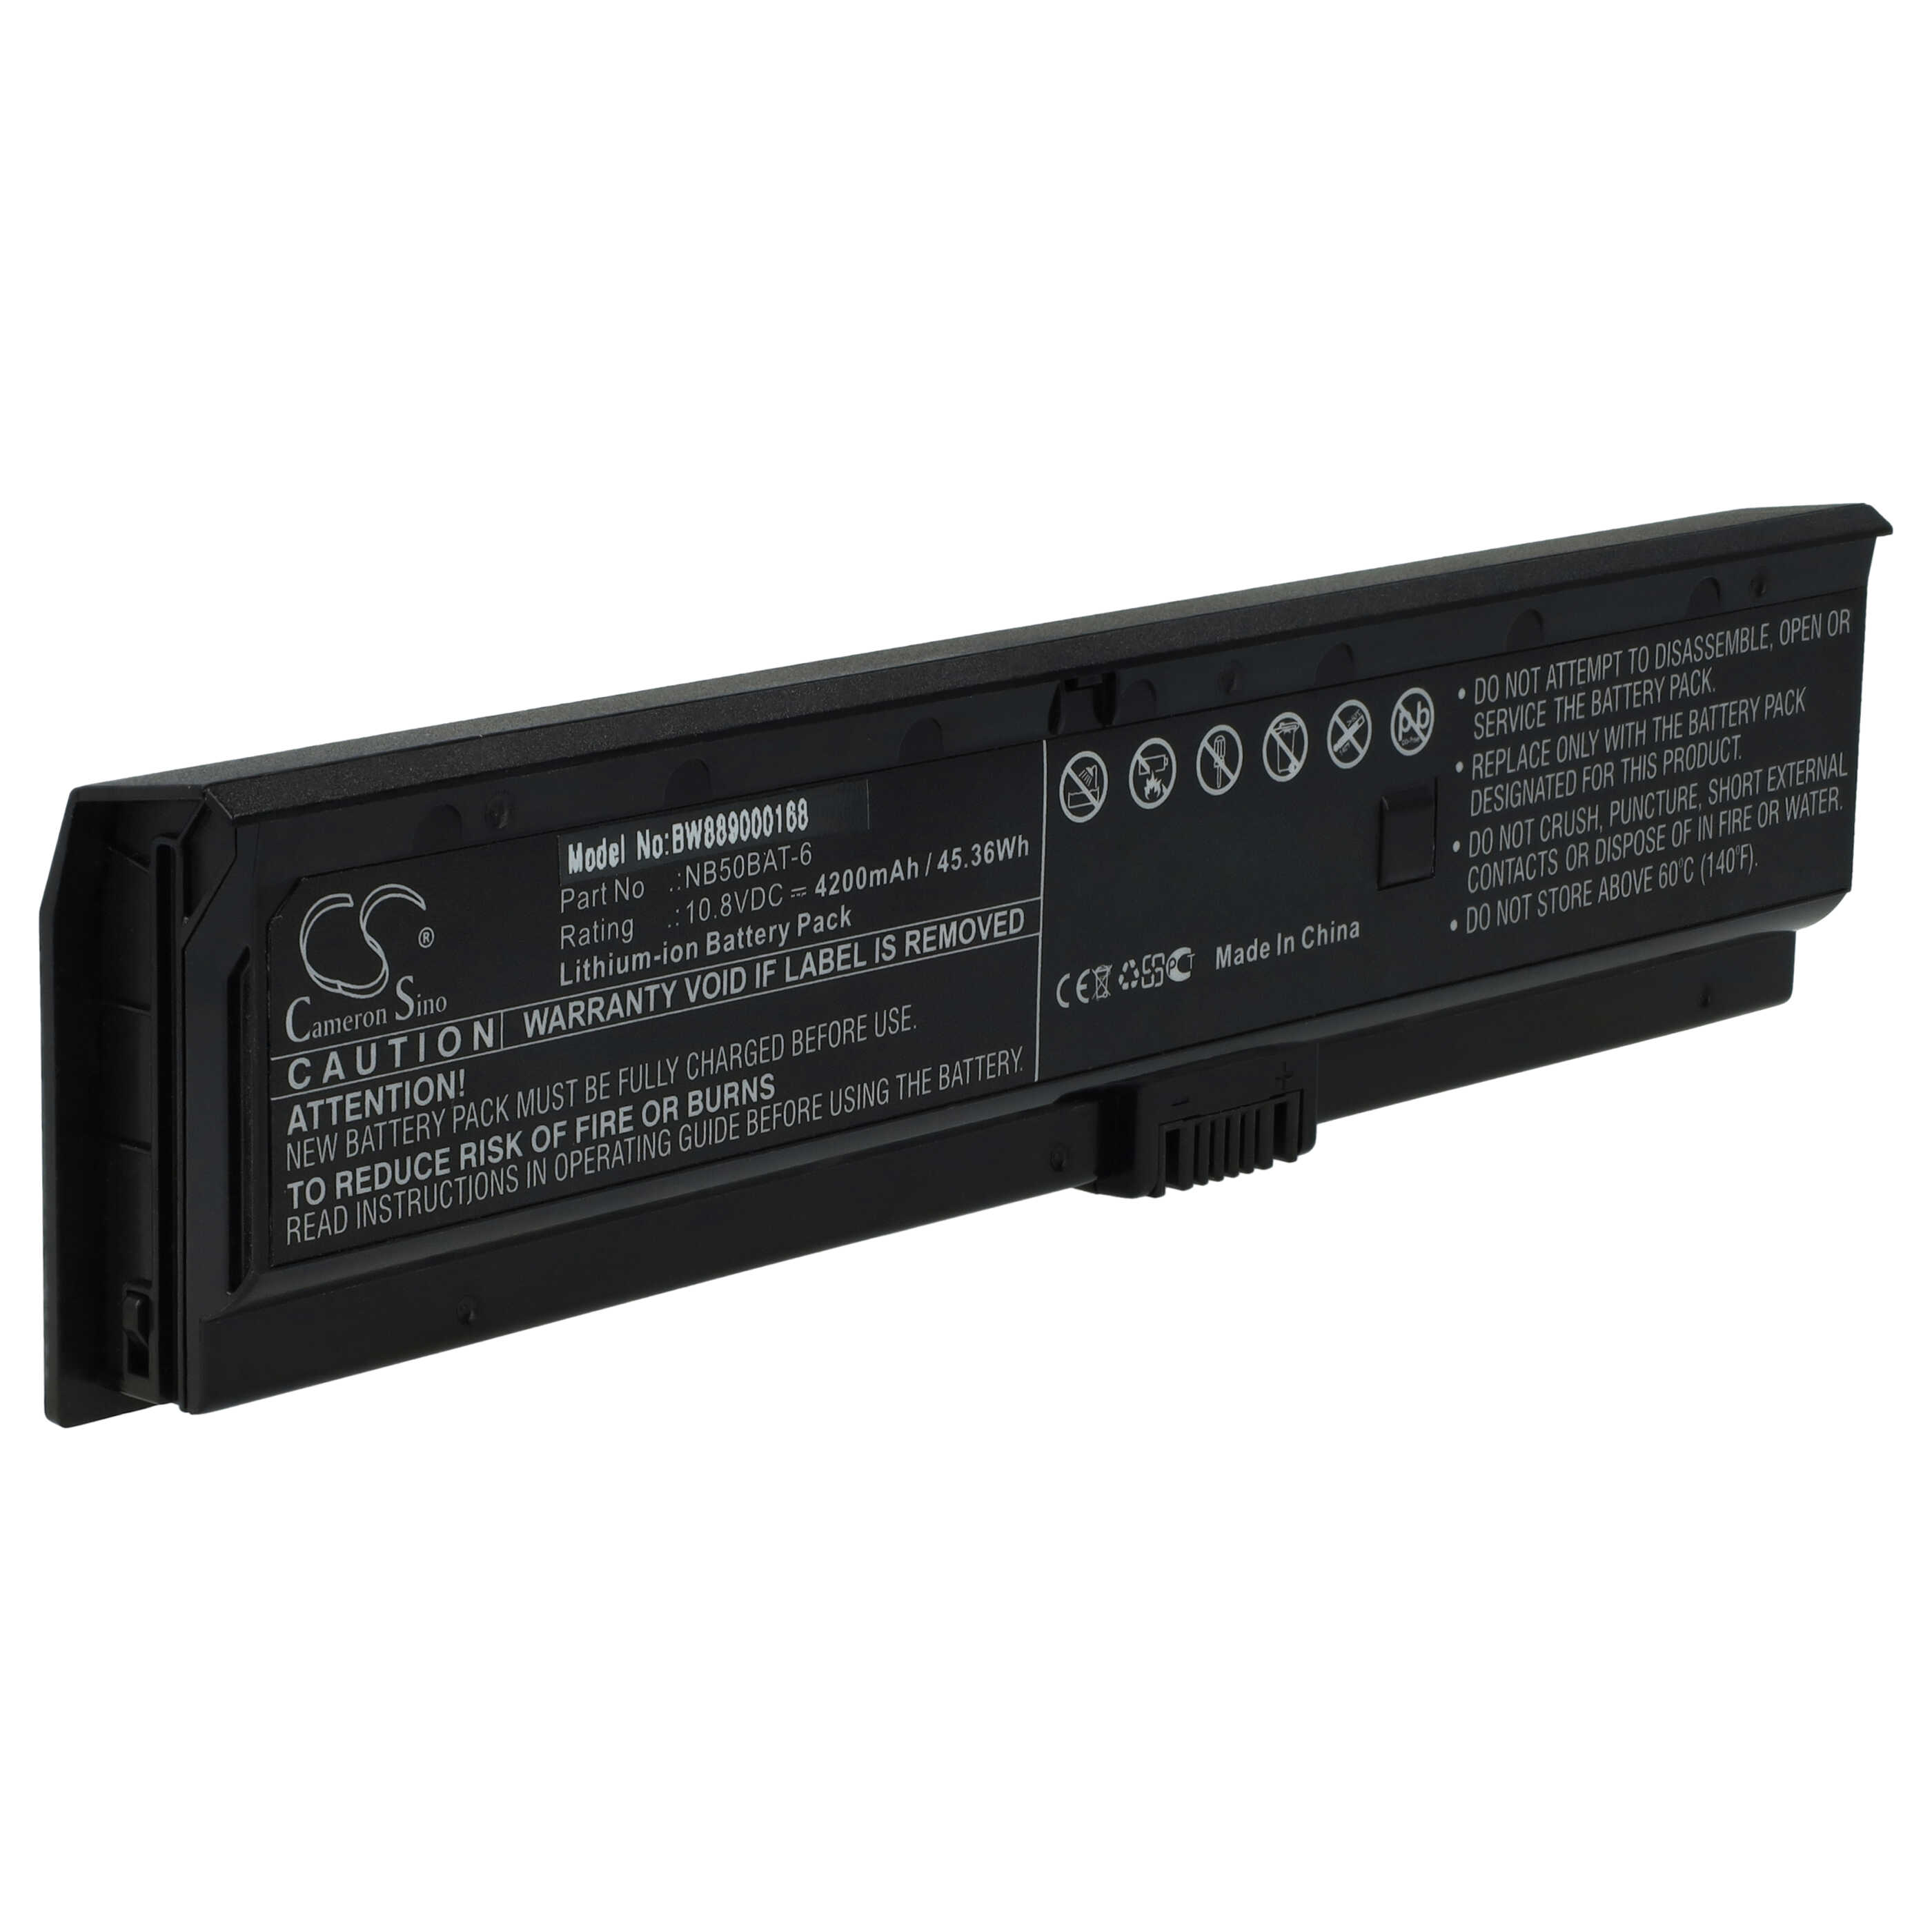 Batería reemplaza Clevo NB50BAT-6 para notebook Shinelon - 4200 mAh 10,8 V Li-Ion